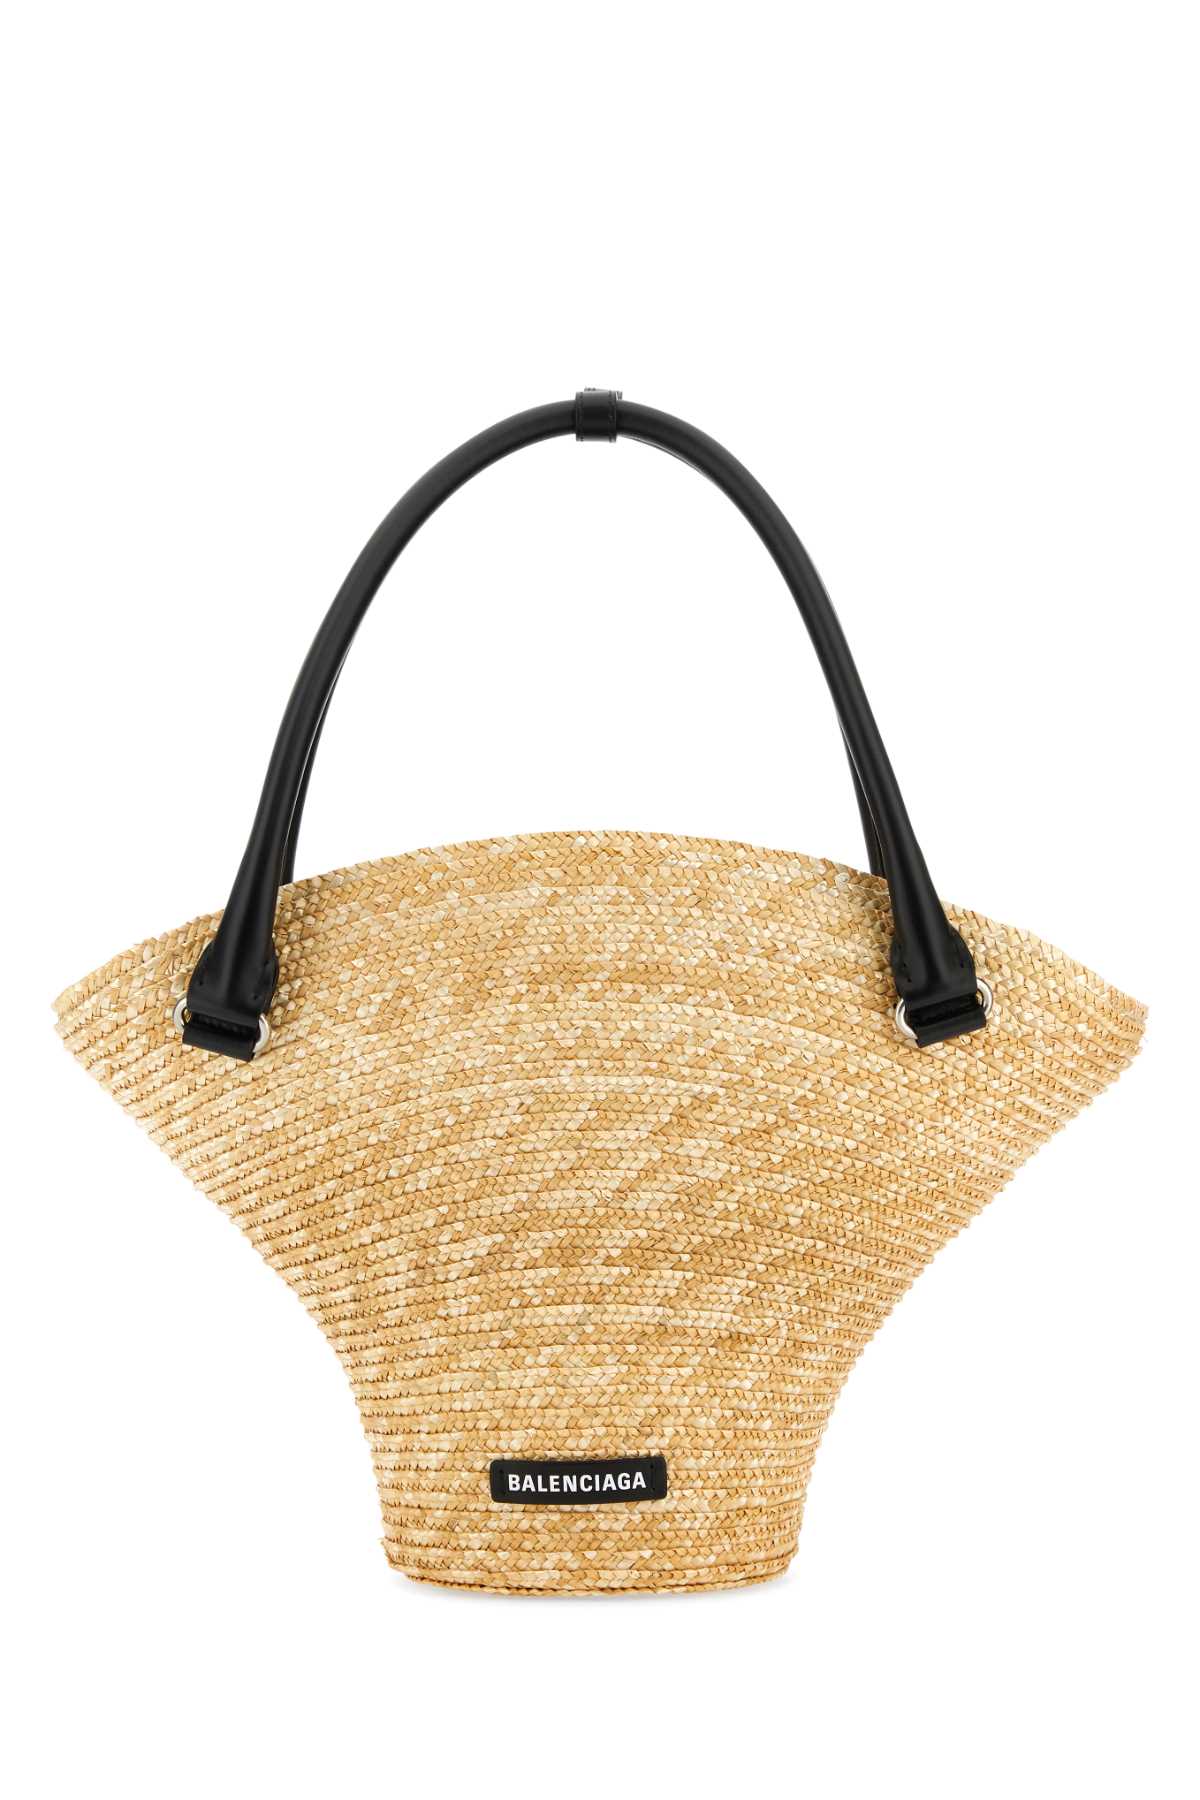 Balenciaga Straw Medium Beach Handbag